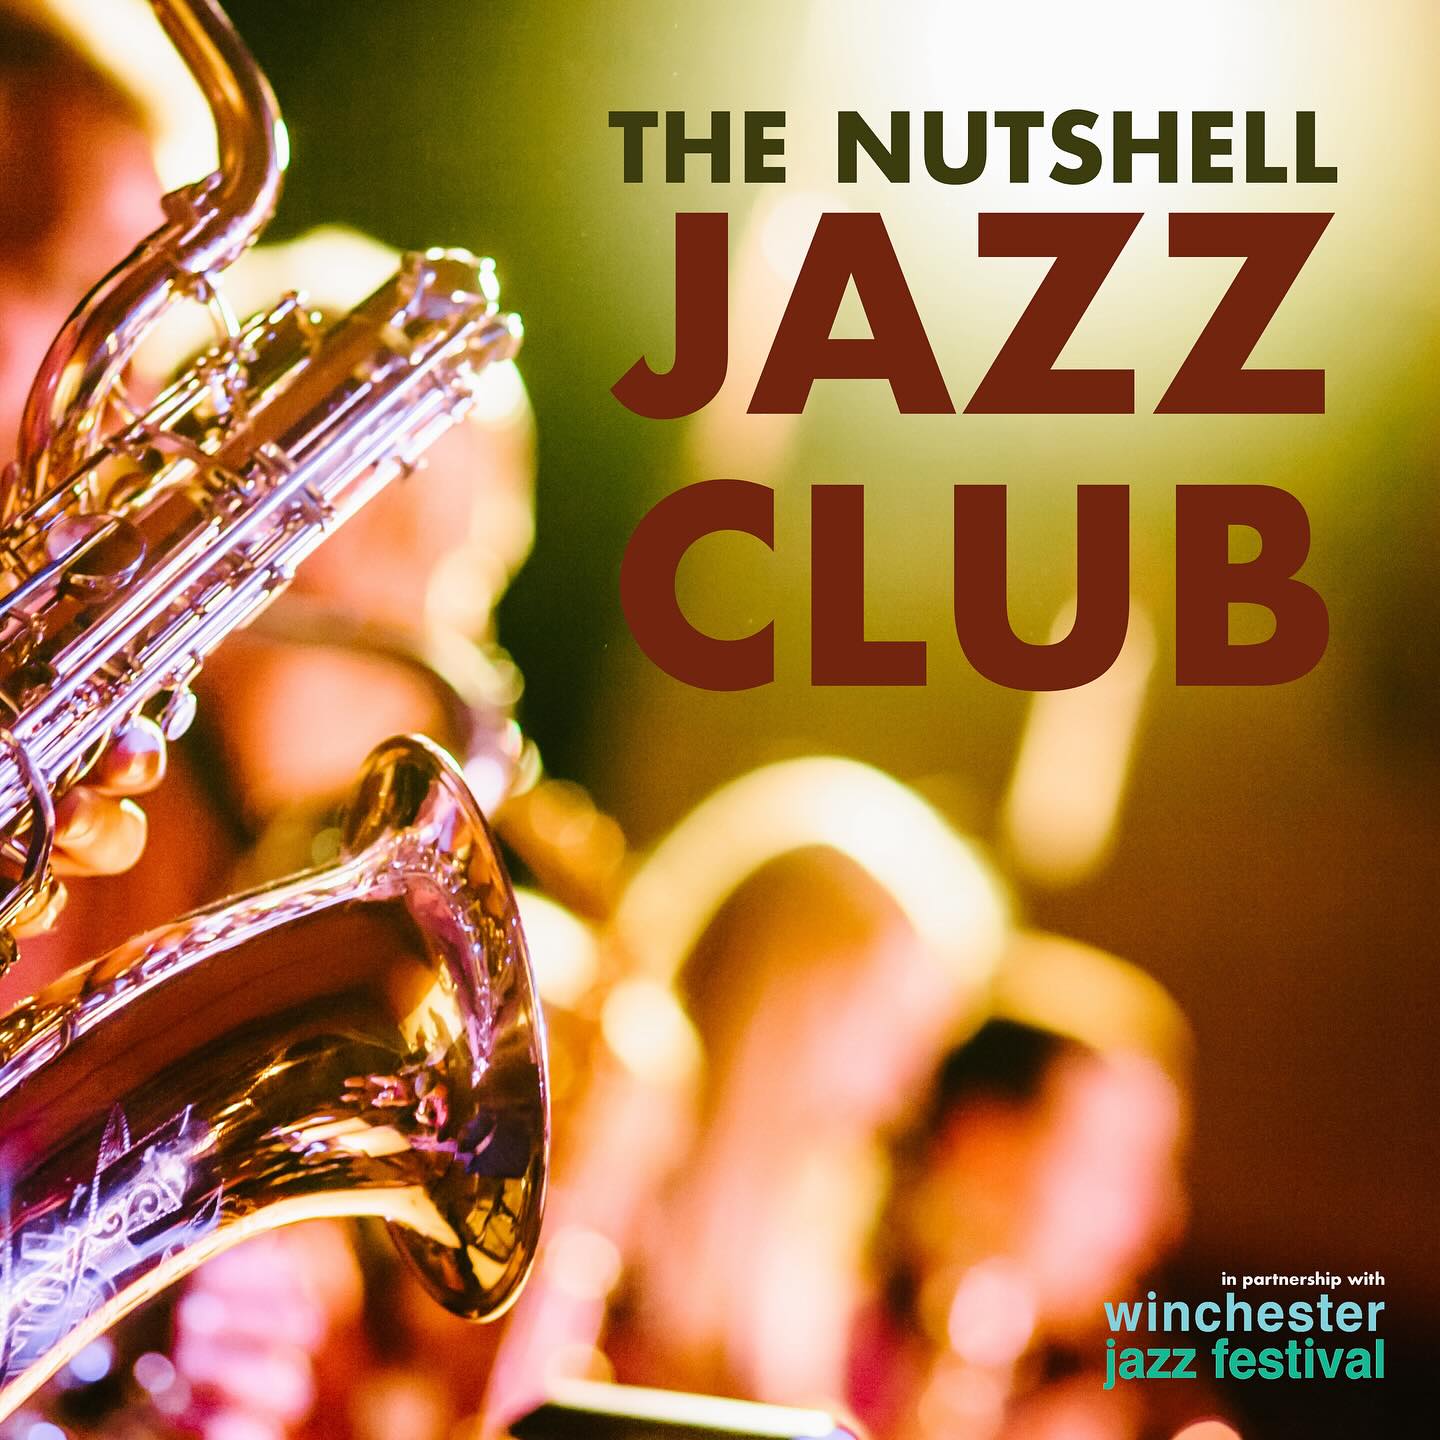 The Nutshell Jazz Club